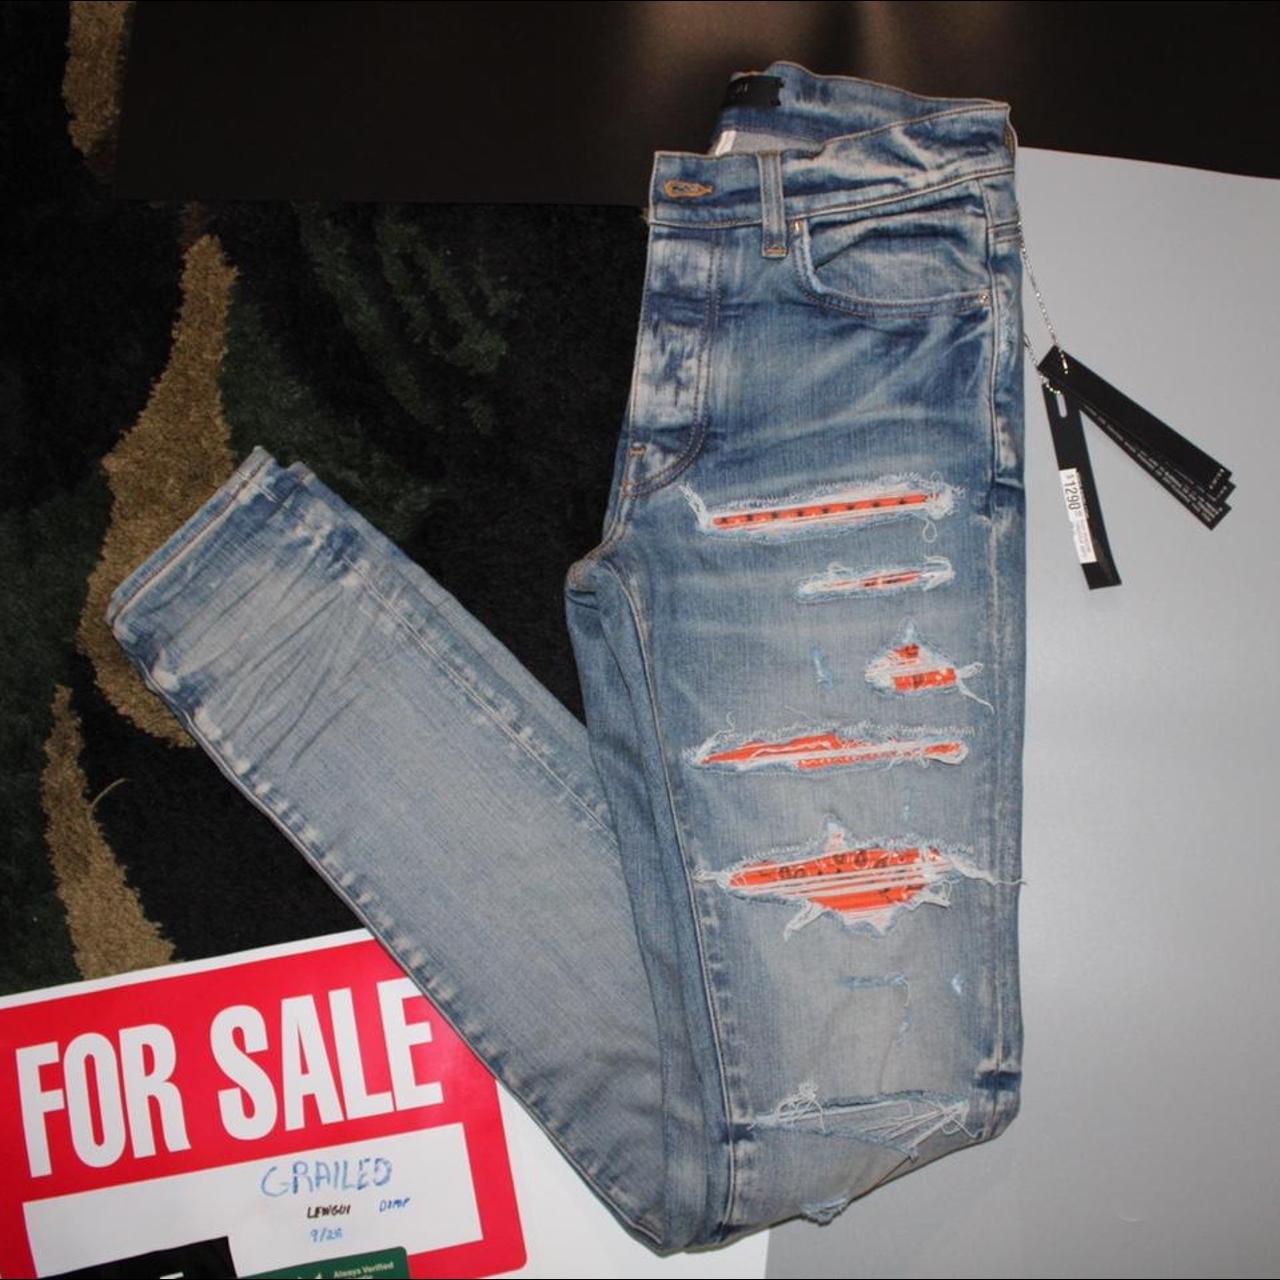 Product Image 4 - Amiri bandana skinny jeans

Details
Inseam: 34"
Rise: